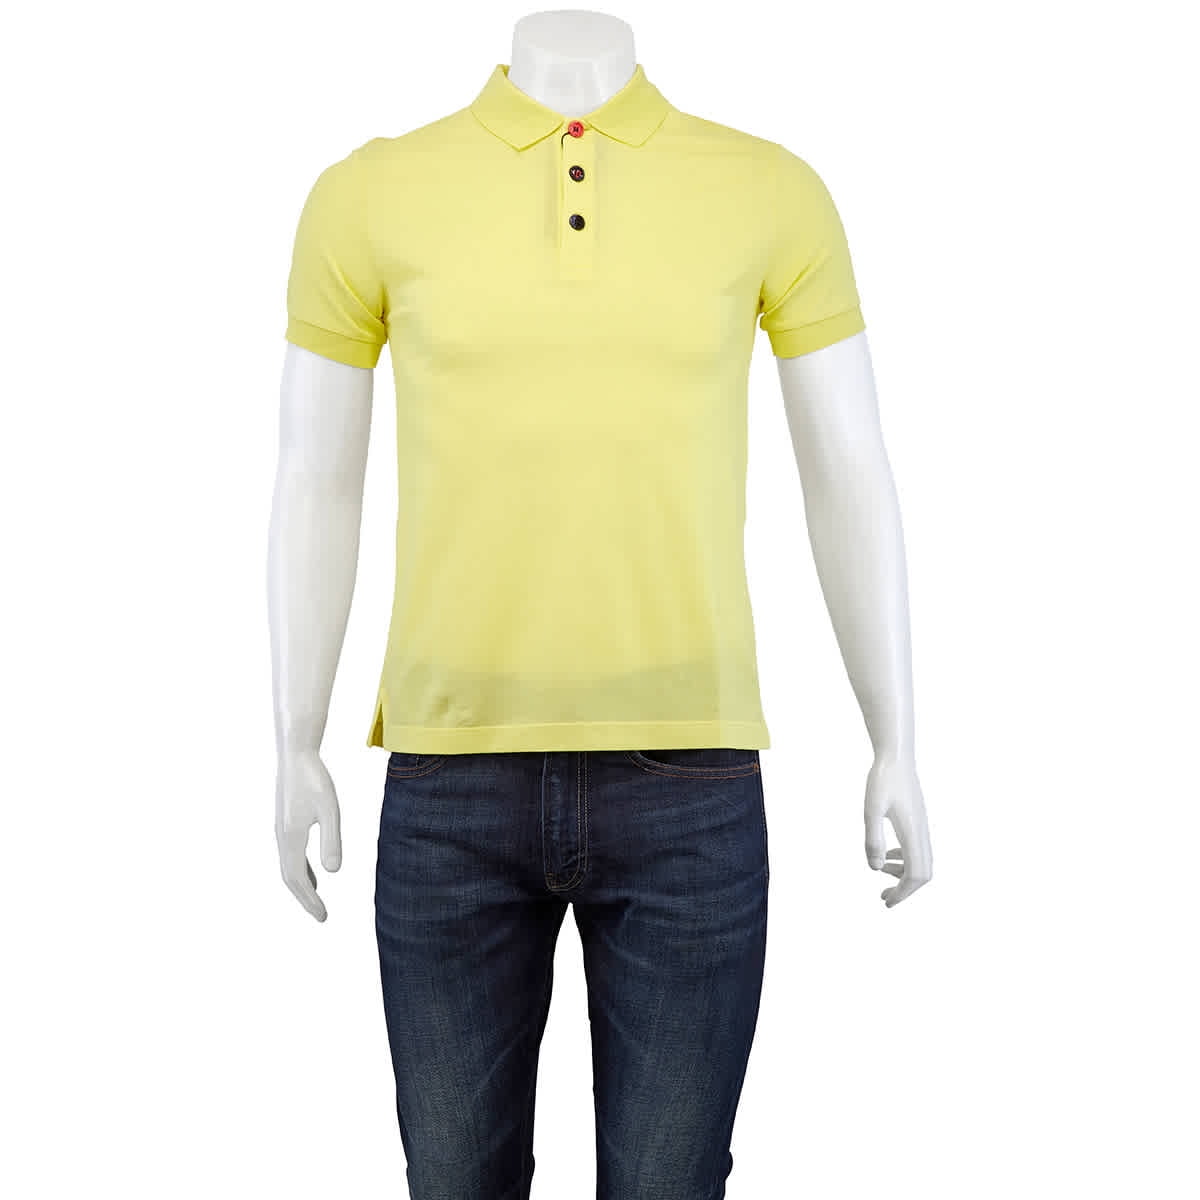 Burberry Painted Button Cotton Pique Polo Shirt, Brand Size Large -  